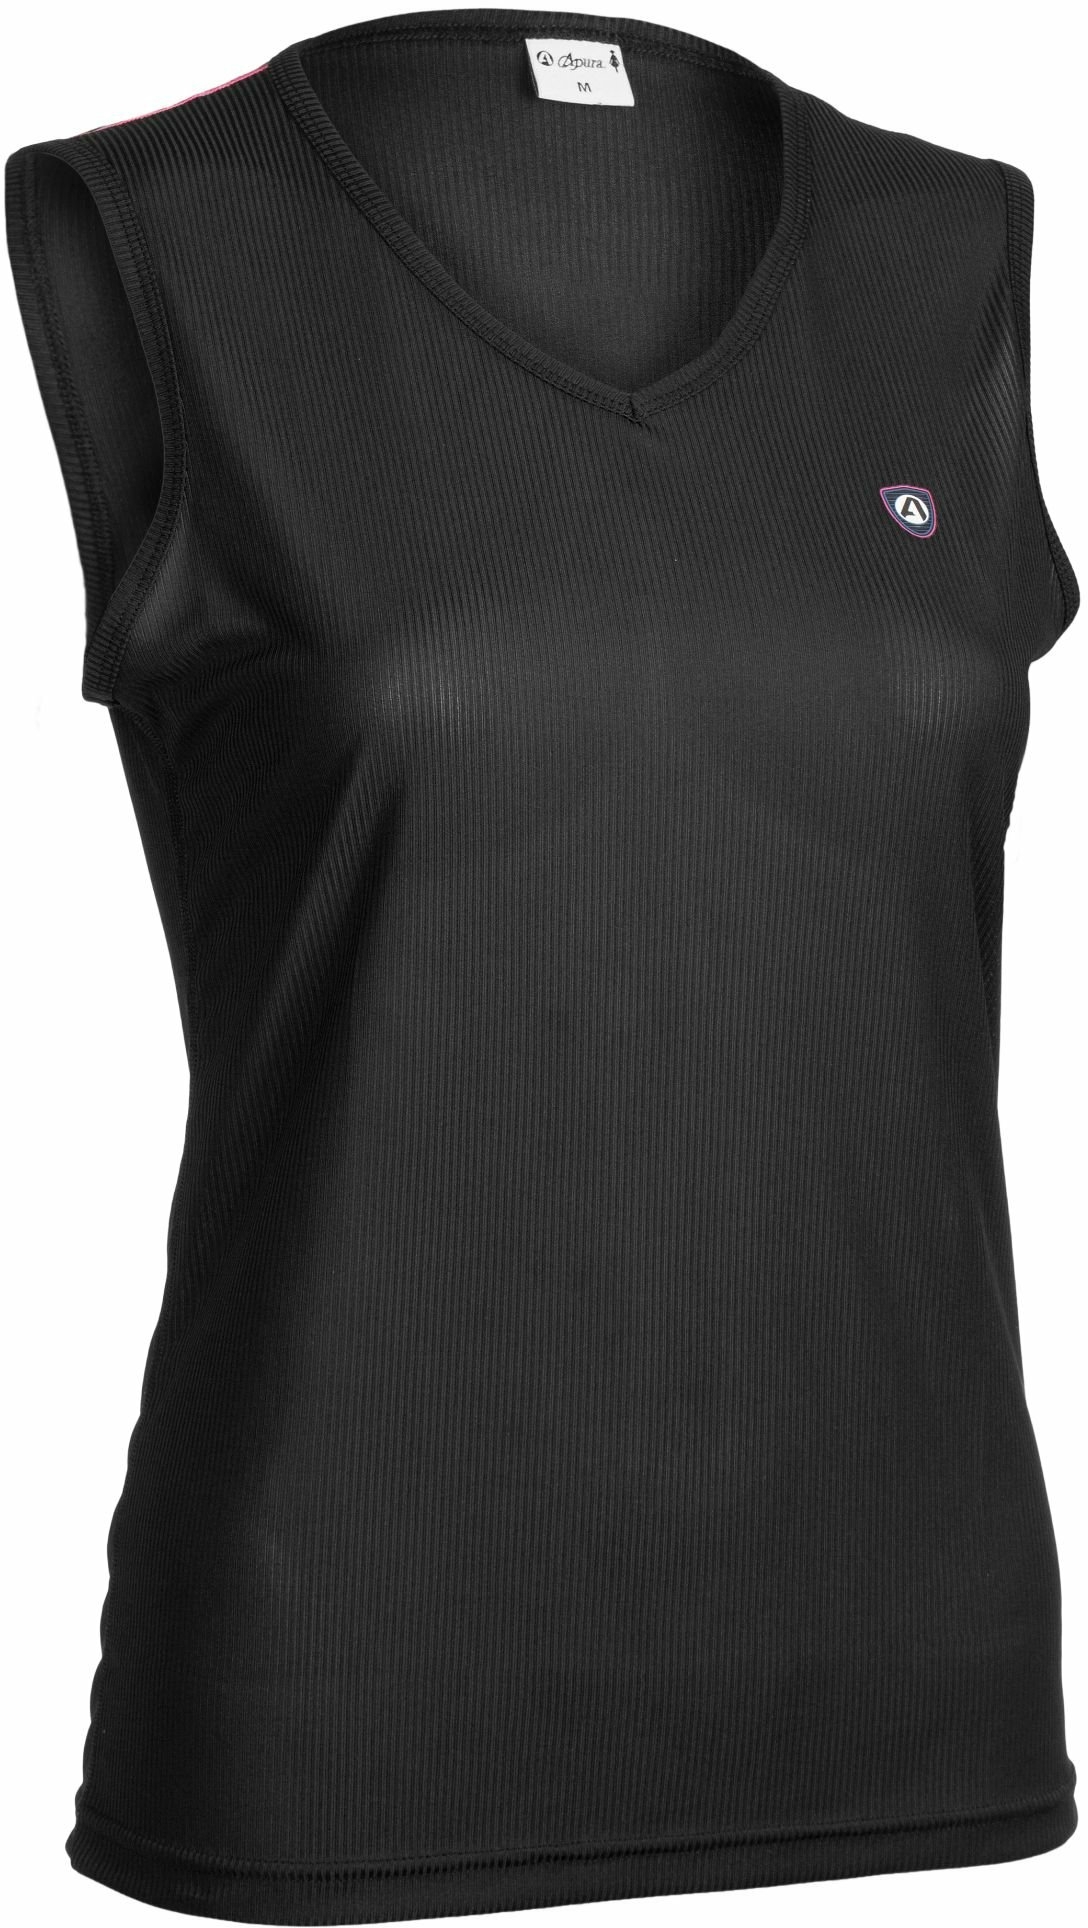 Apura Damen Unterhemd Sleeveless Shirt 2.0 M schwarz